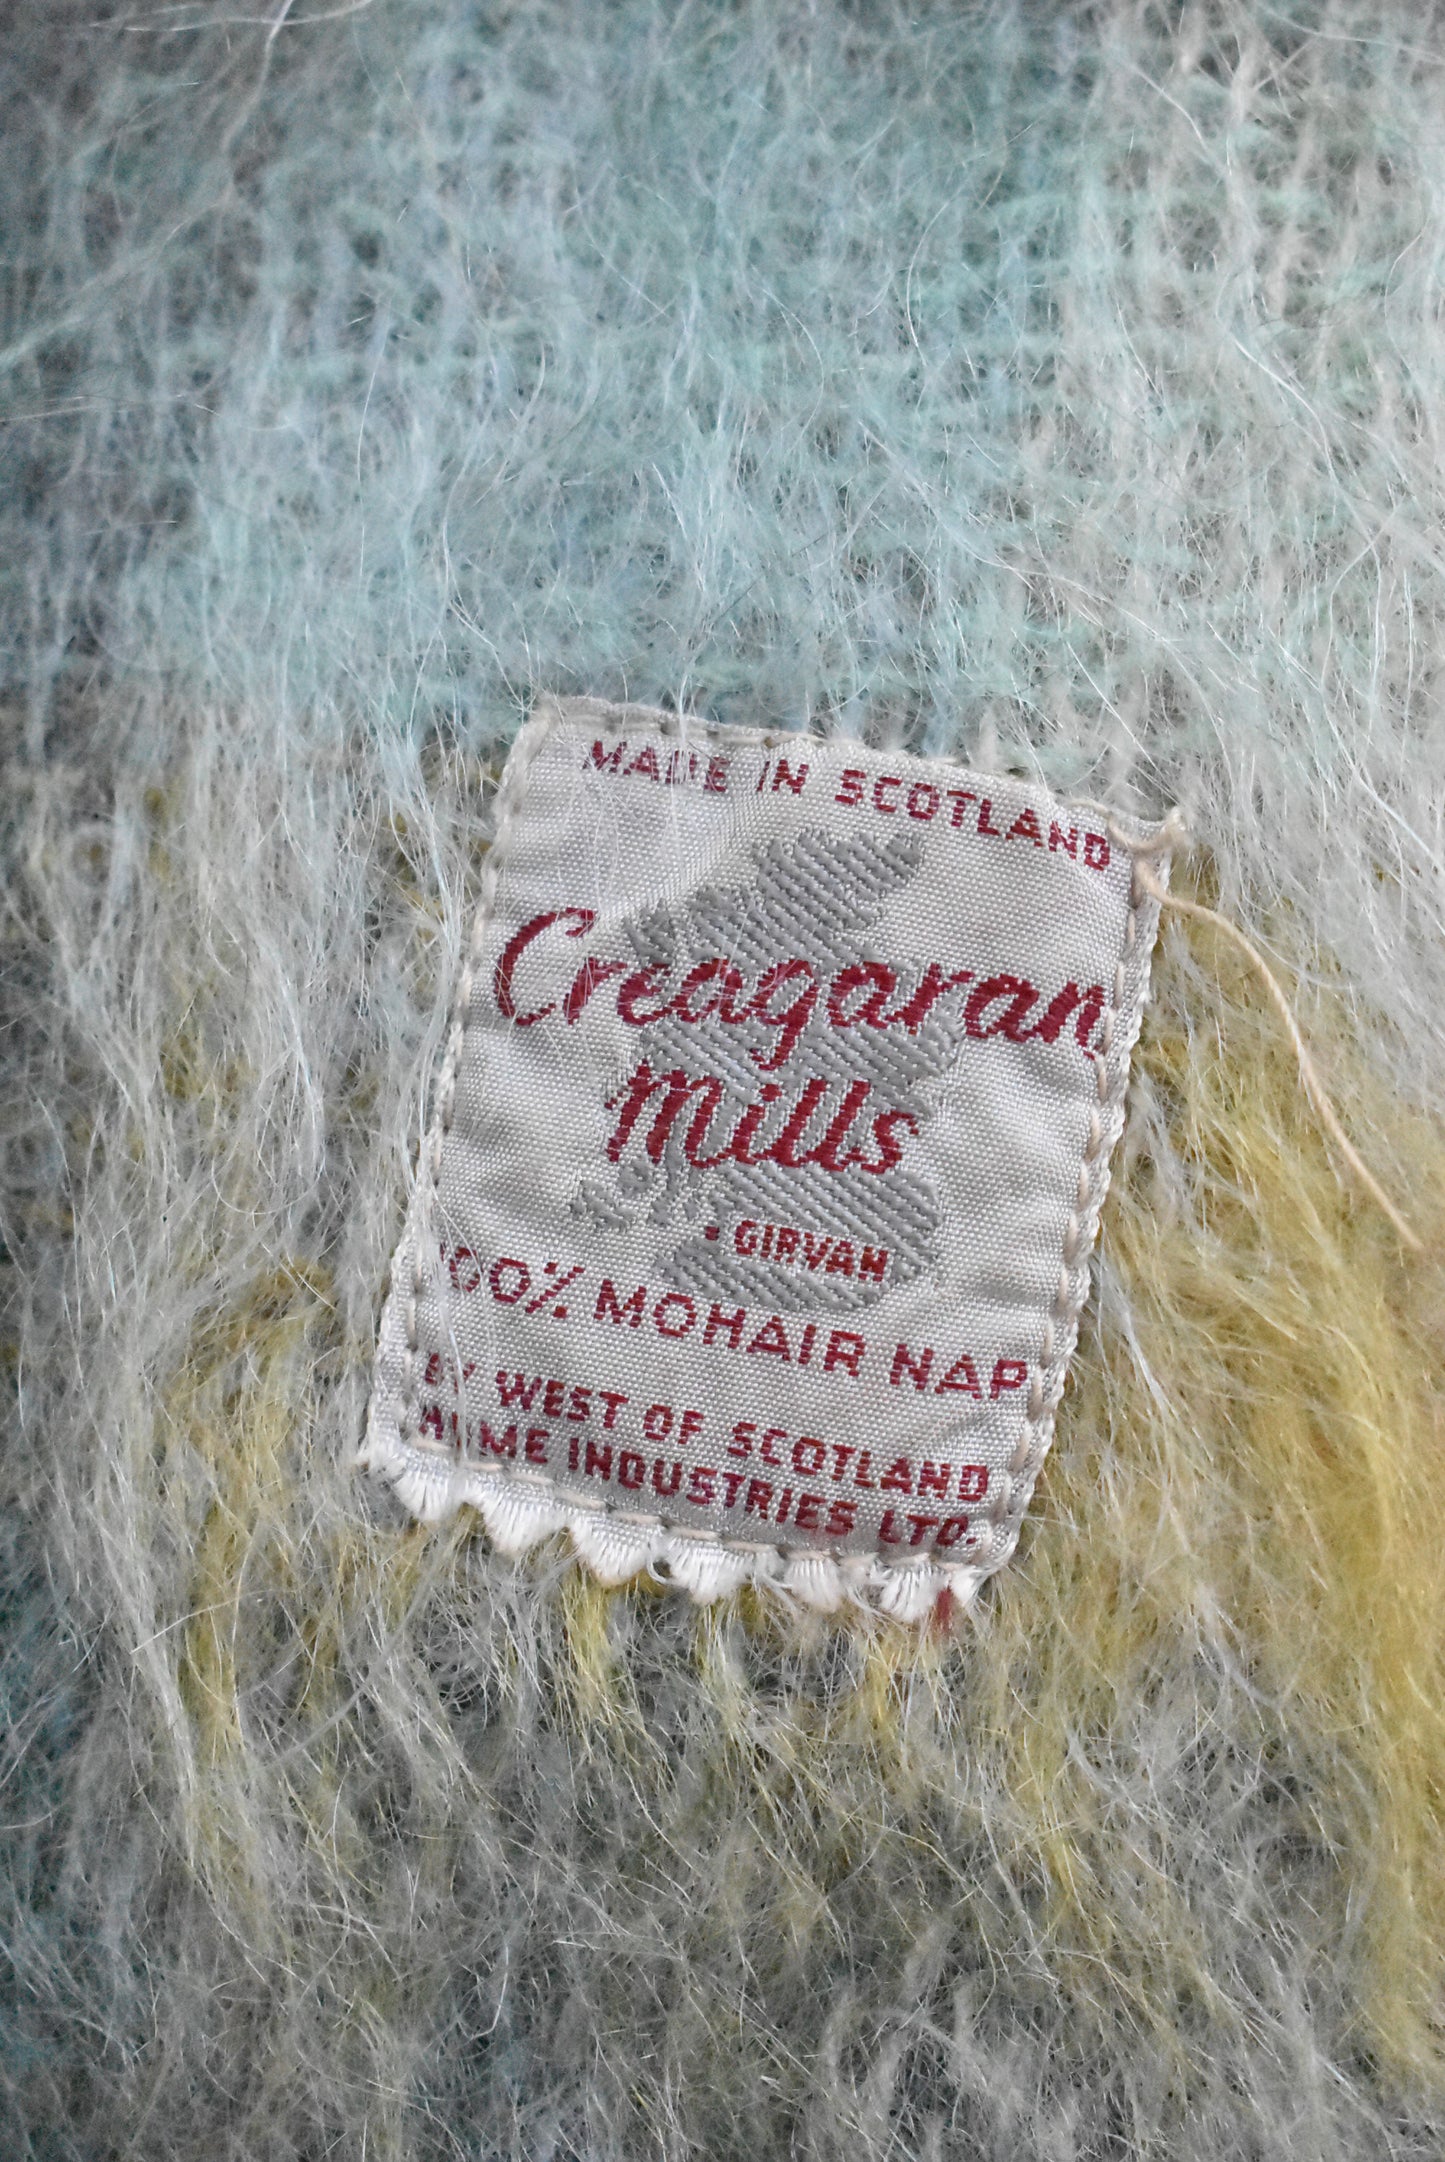 Creagaran Mills Scottish made mohair scarf